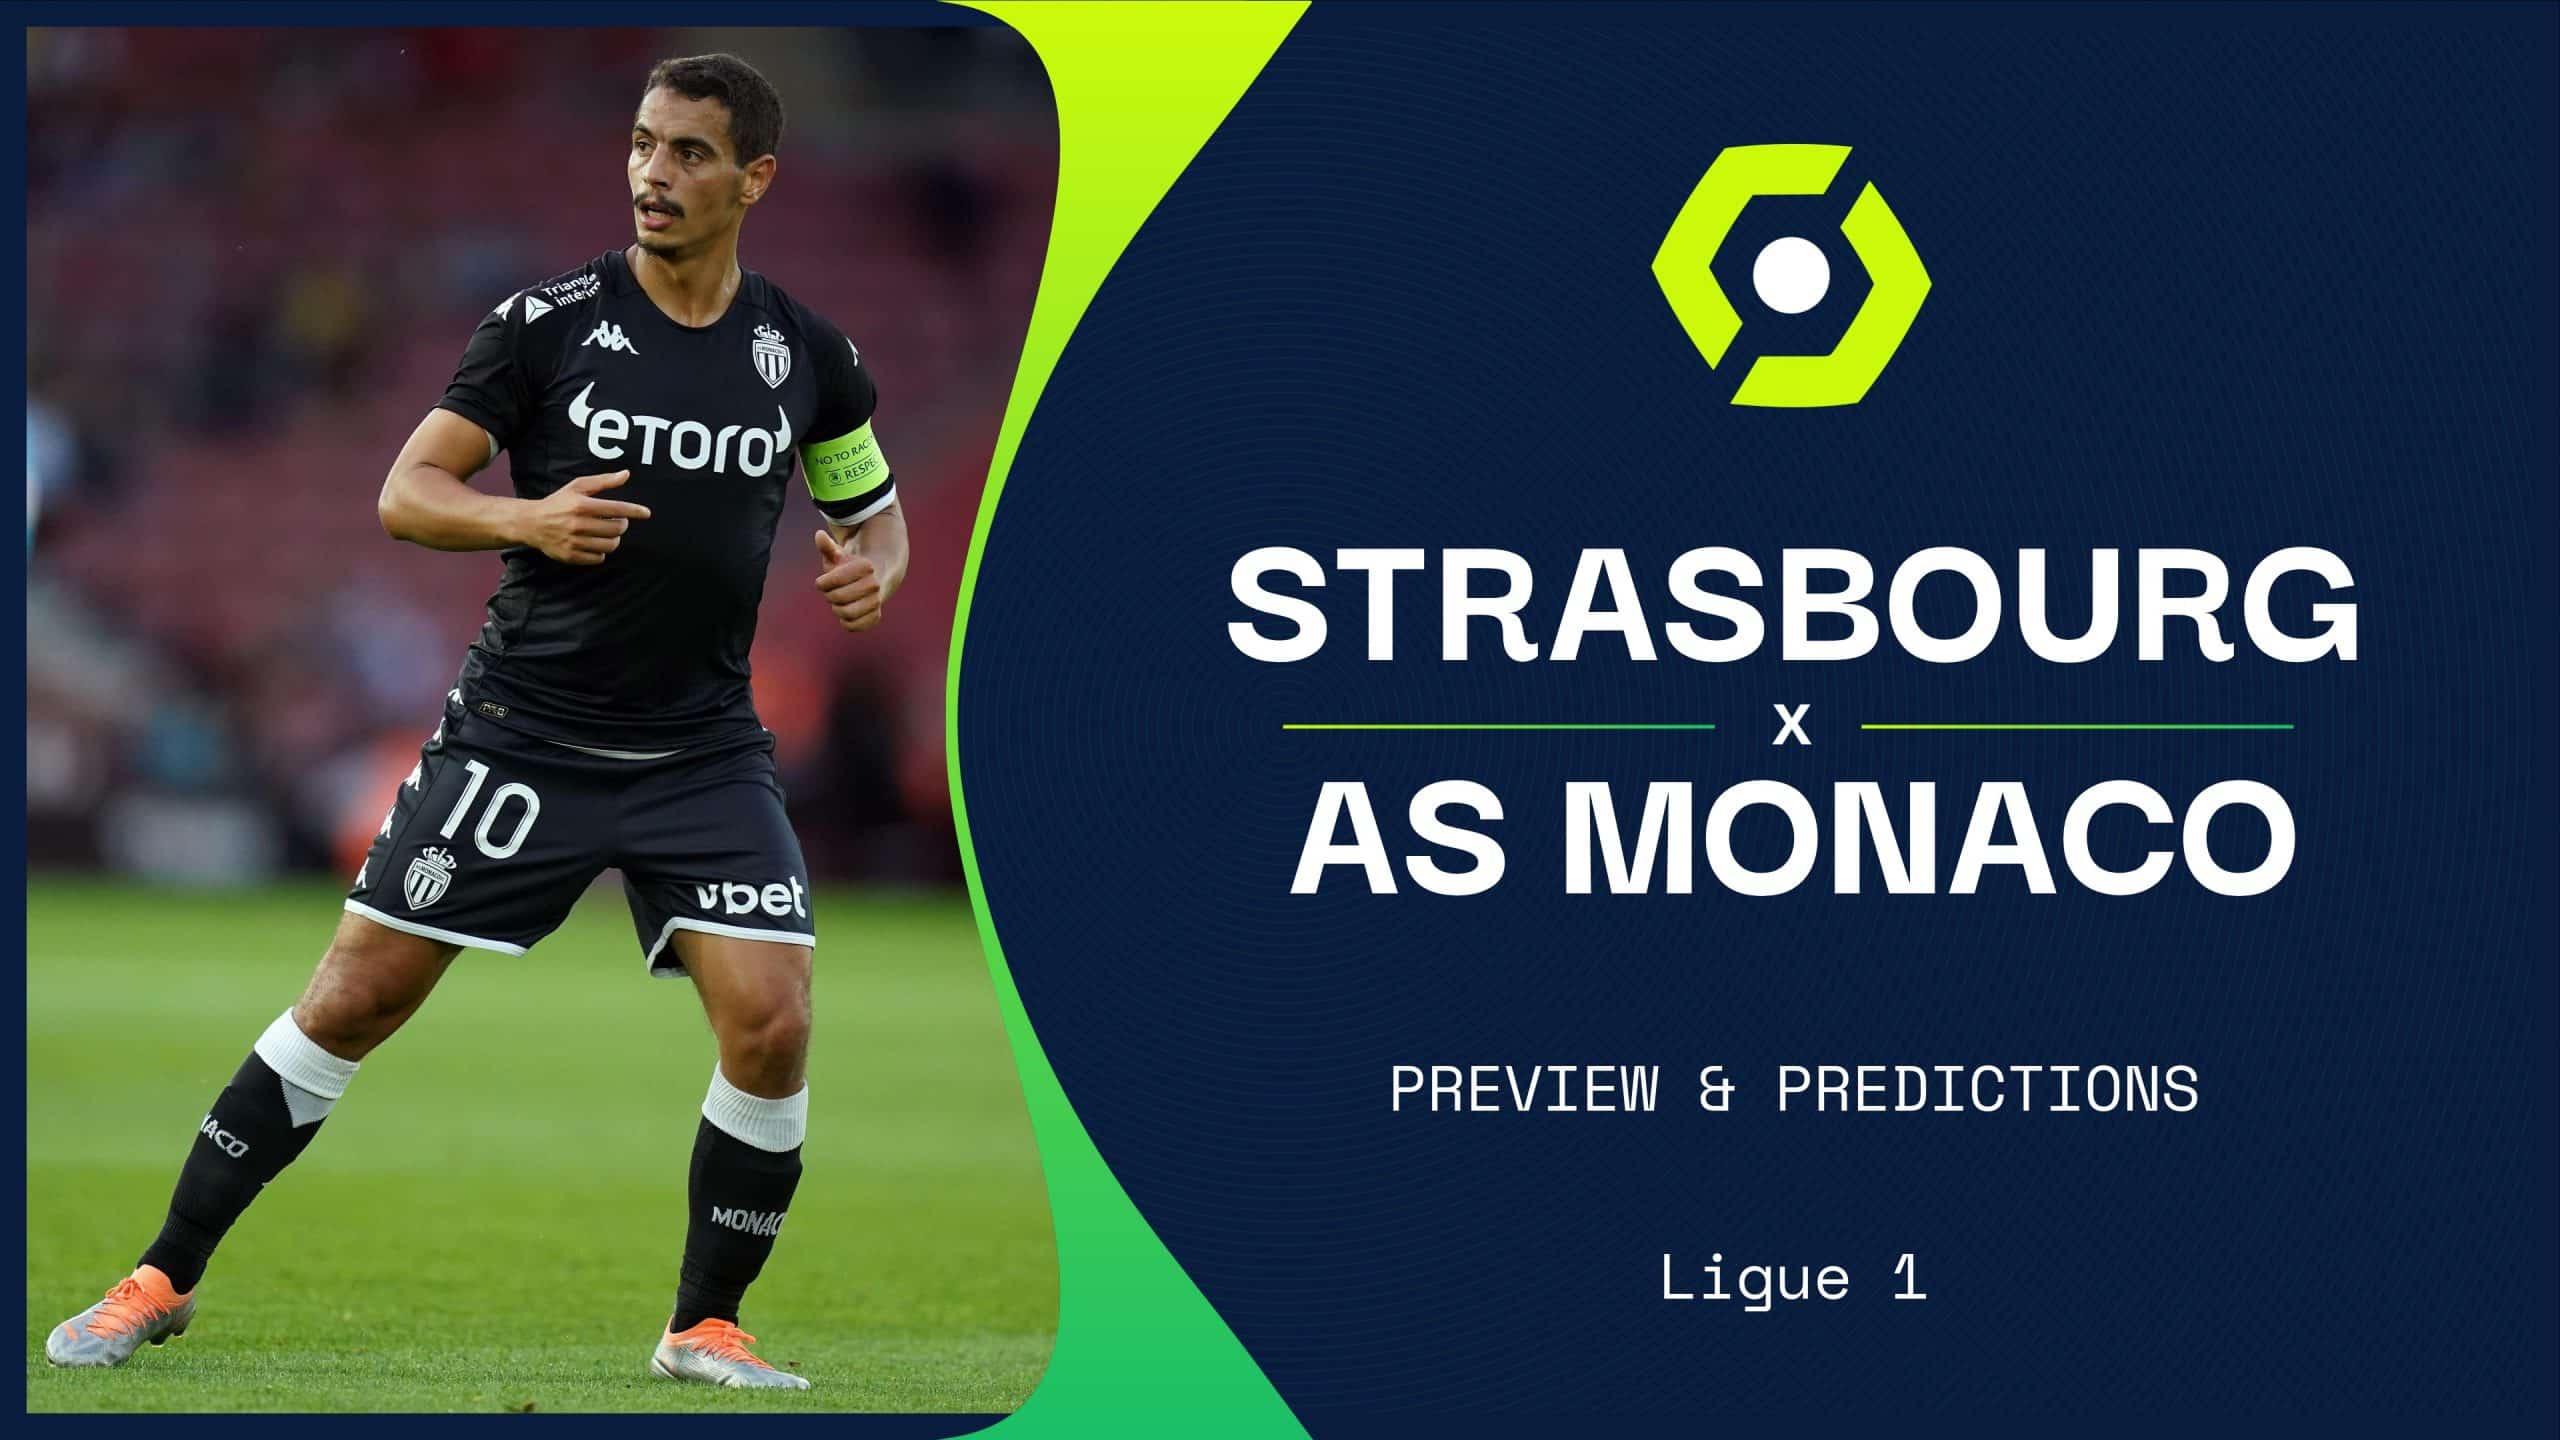 Strasbourg Monaco (TV/Streaming) Sur quelle chaîne regarder le match de Ligue 1 Uber Eats samedi ? Strasbourg vs Monaco scaled 1